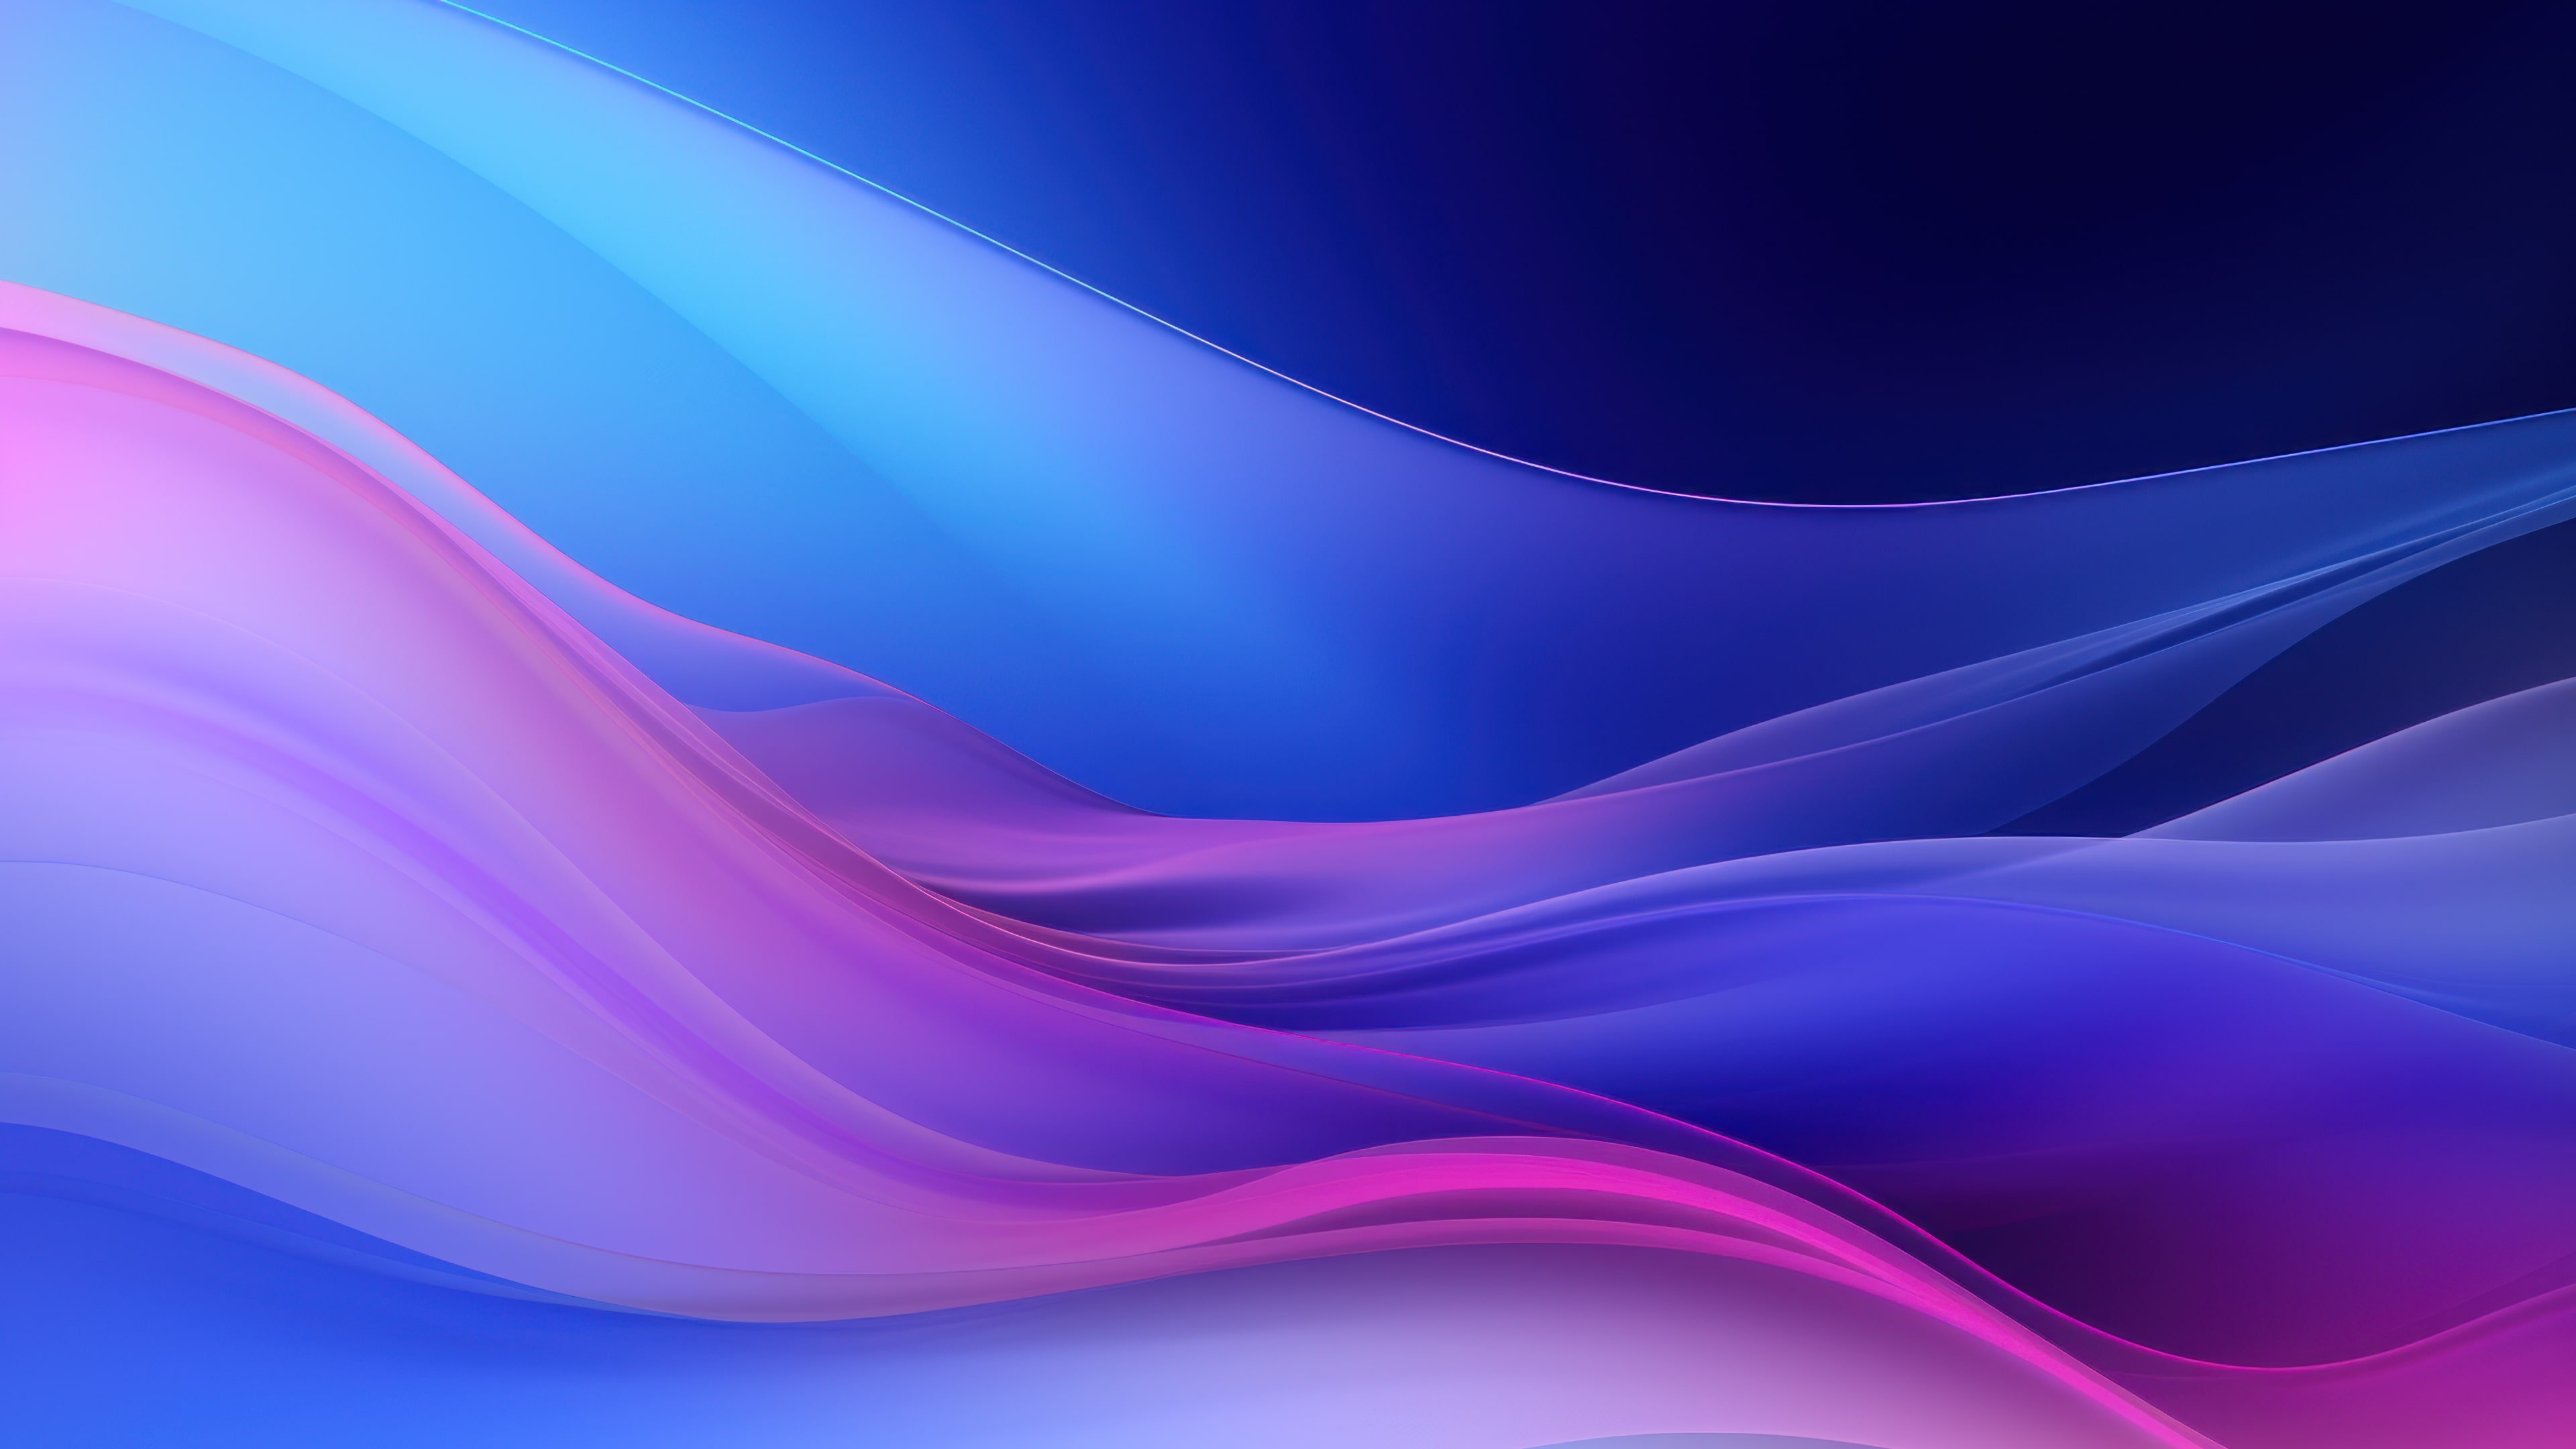 blue abstract desktop backgrounds